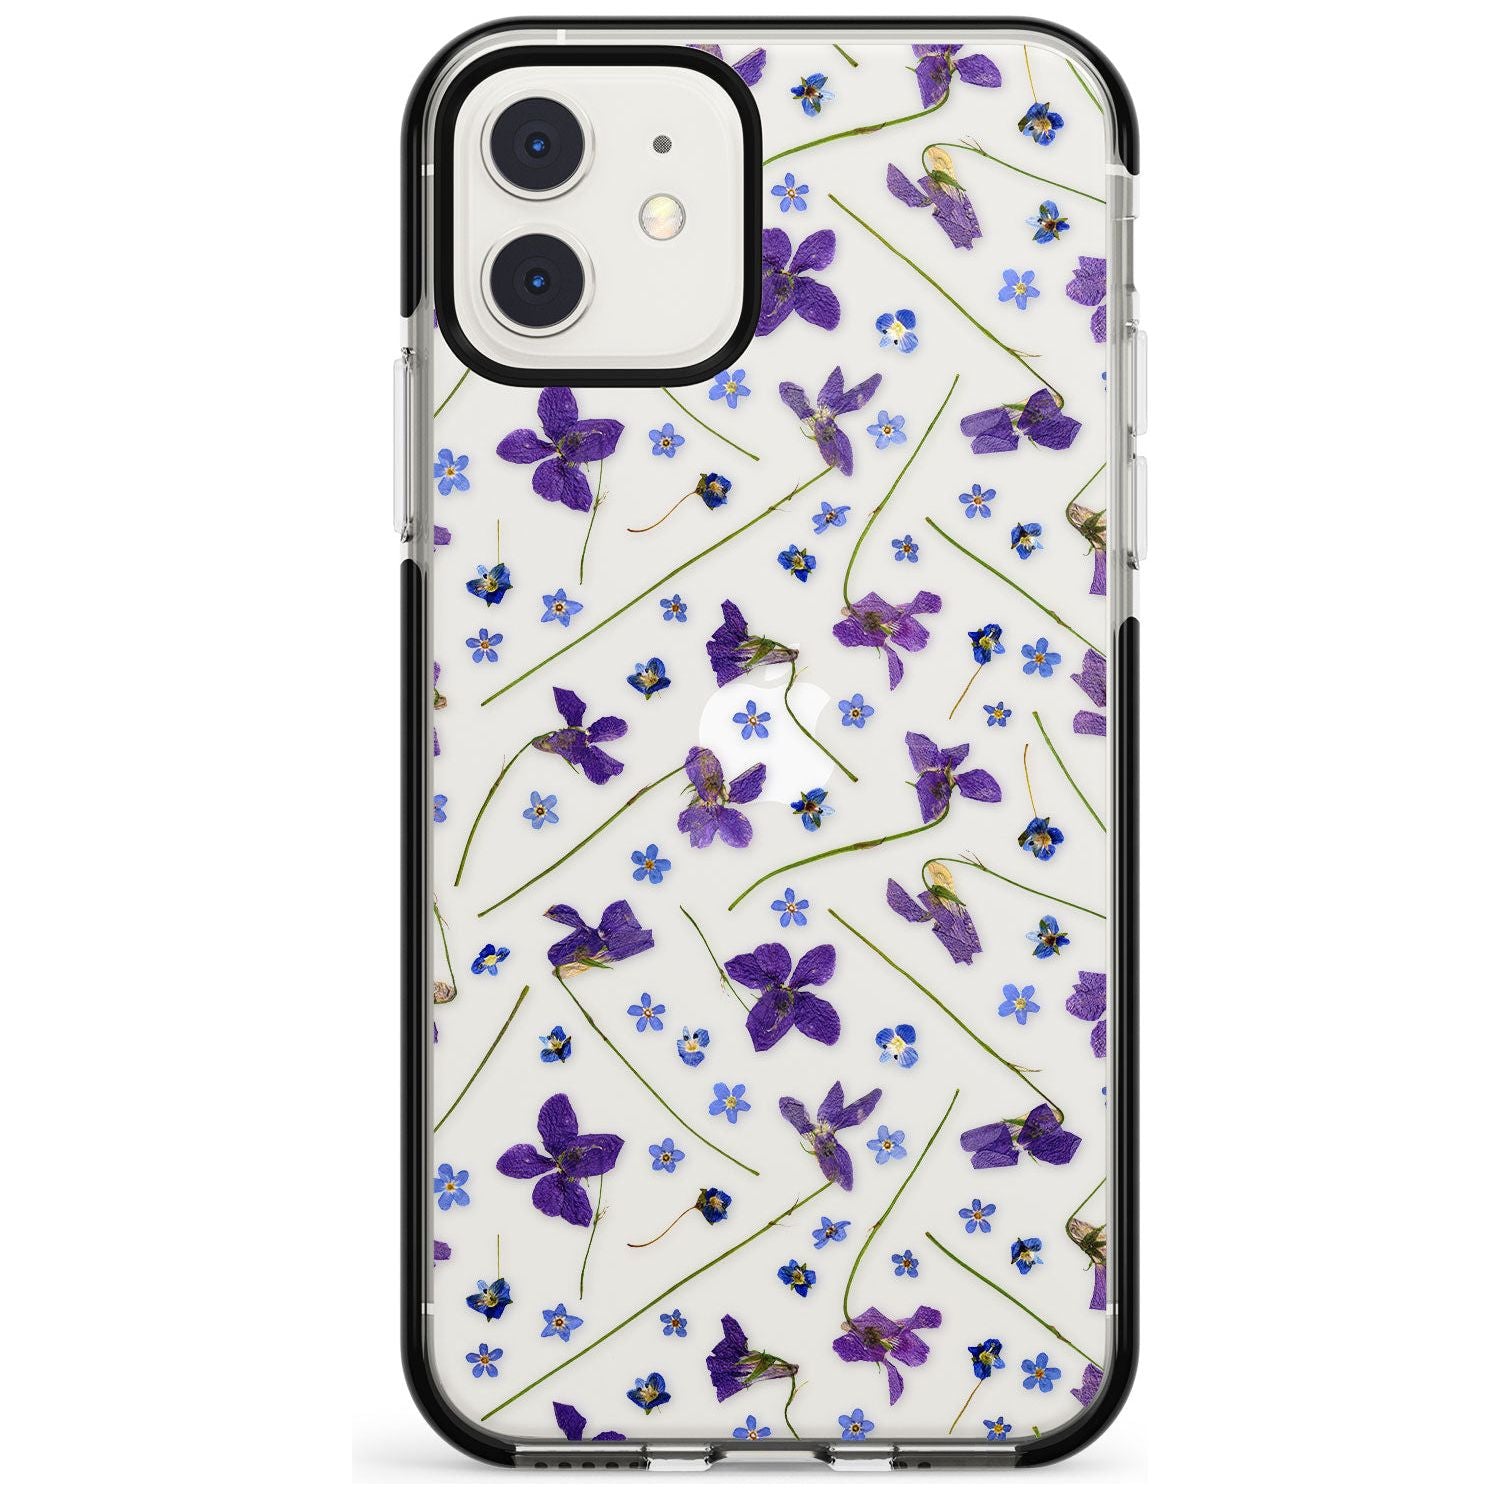 Violet & Blue Floral Pattern Design Black Impact Phone Case for iPhone 11